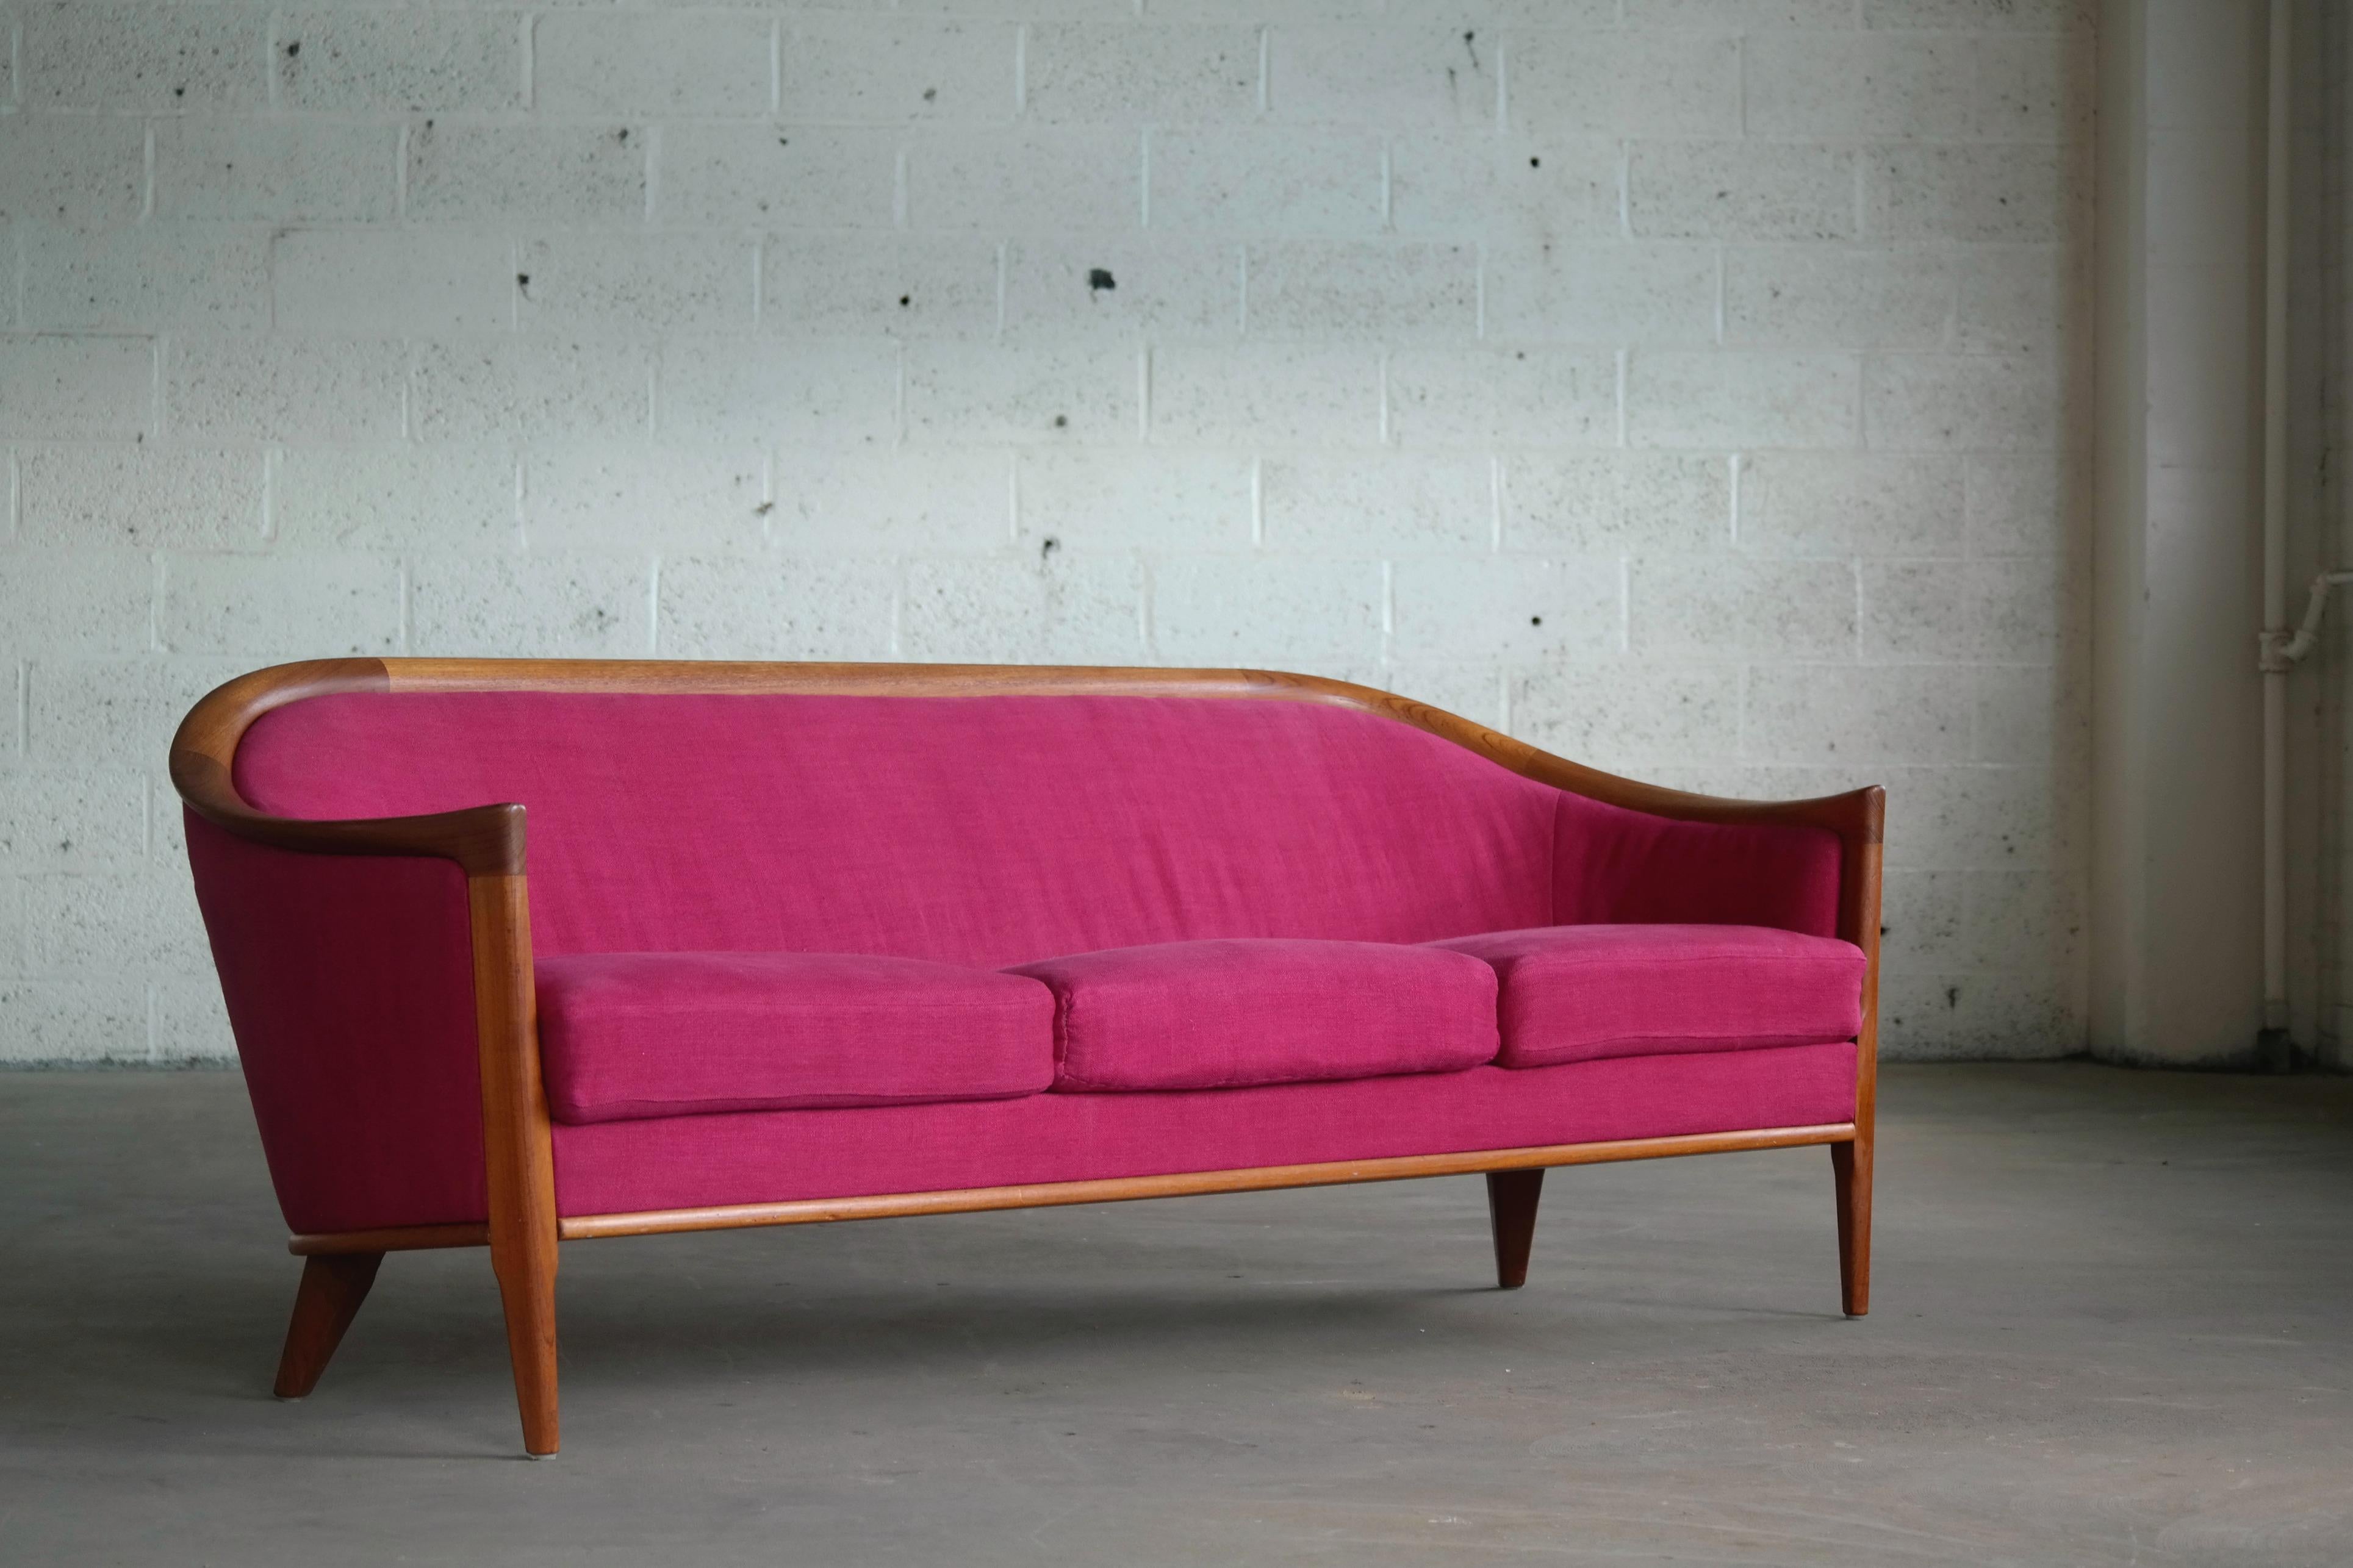 Very classy and elegant sofa model 